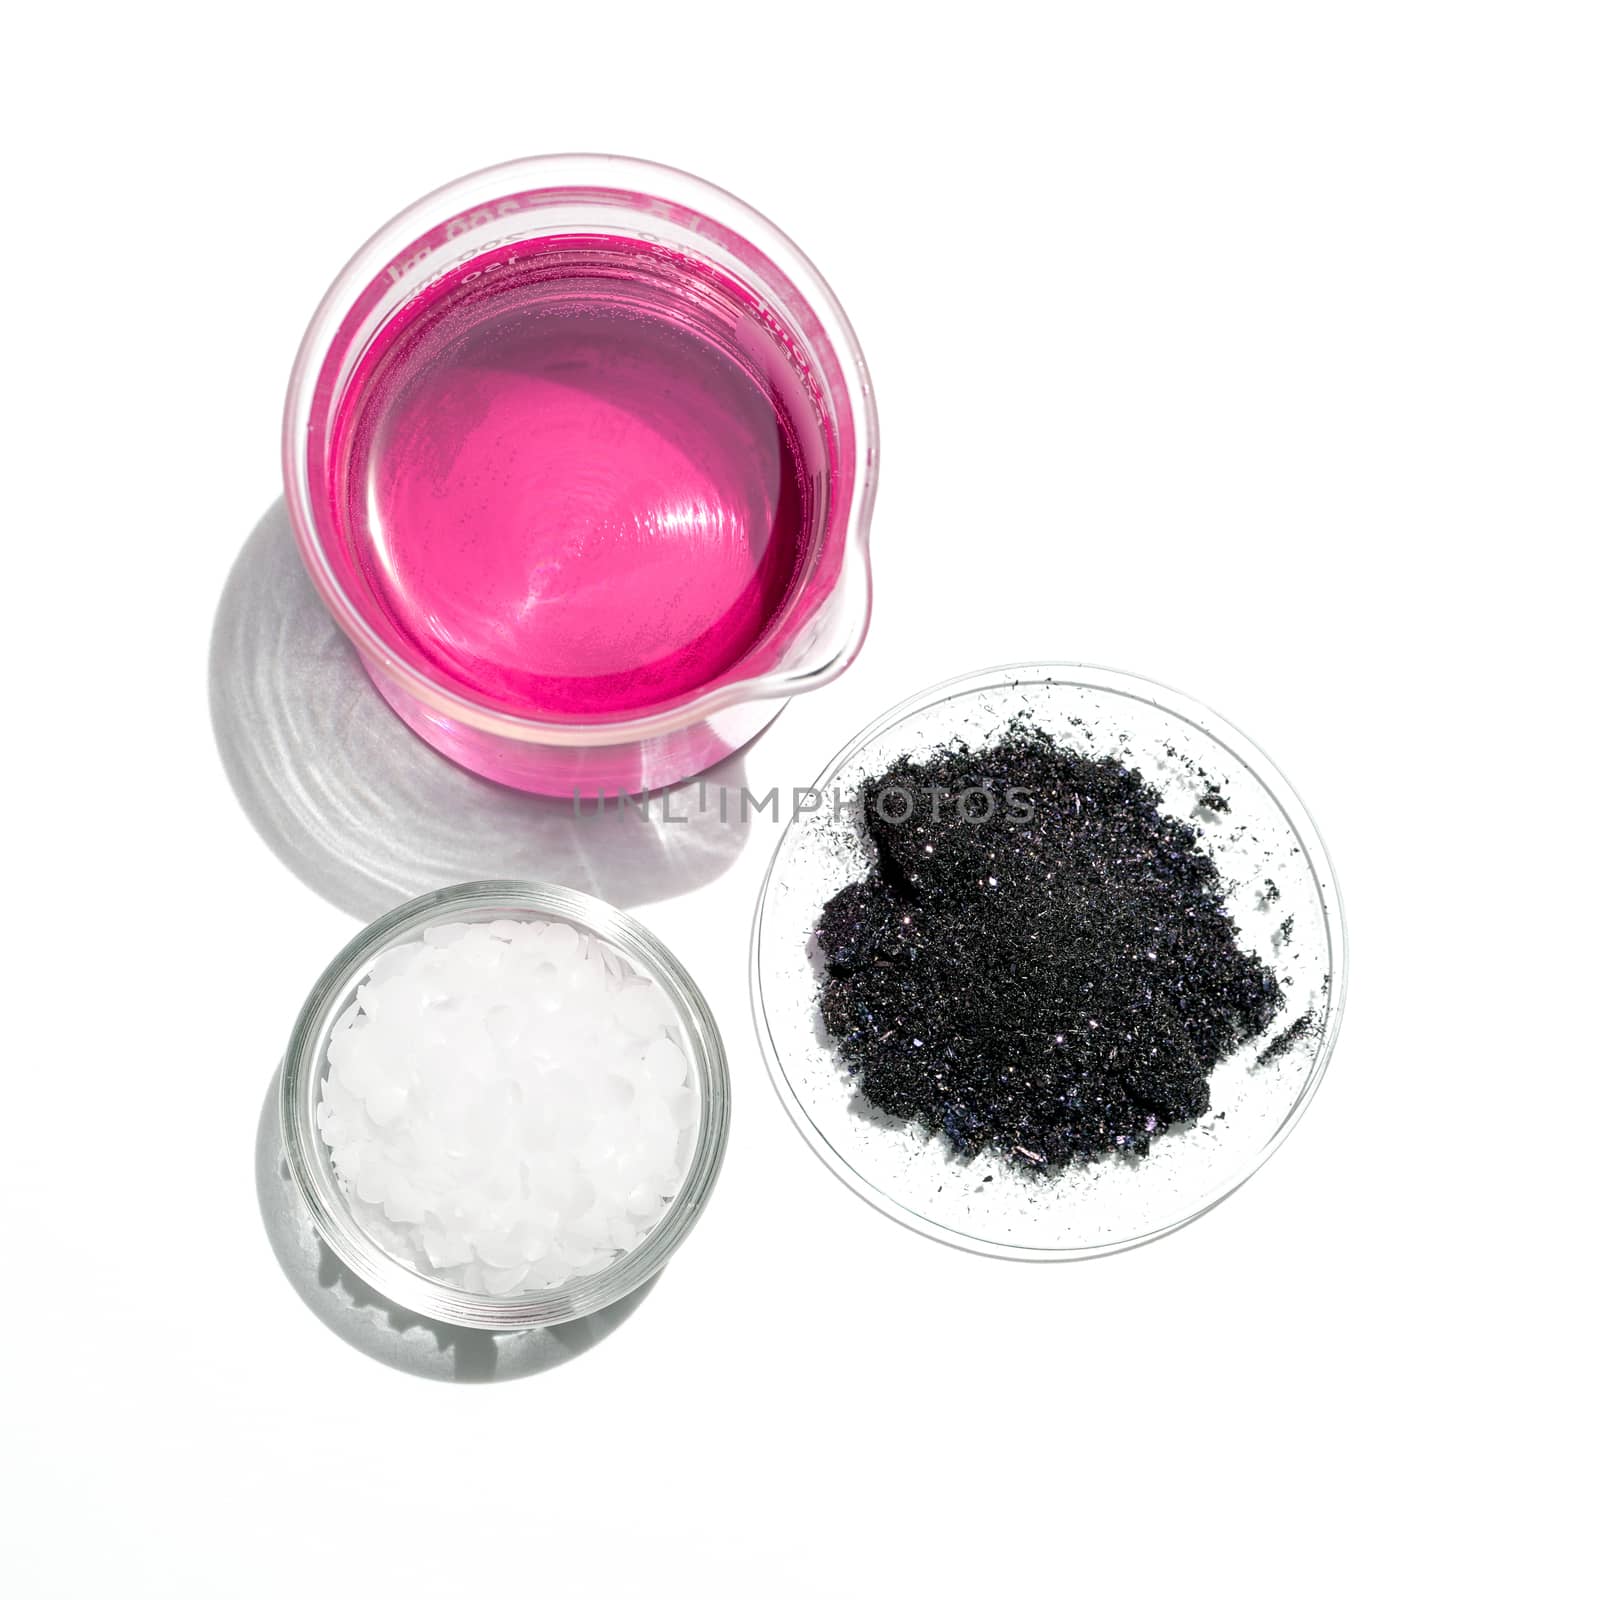 Cosmetic chemicals ingredient on white laboratory table (Top View). Potassium Permanganate Liquid, KMnO4, Microcrystalline wax. 